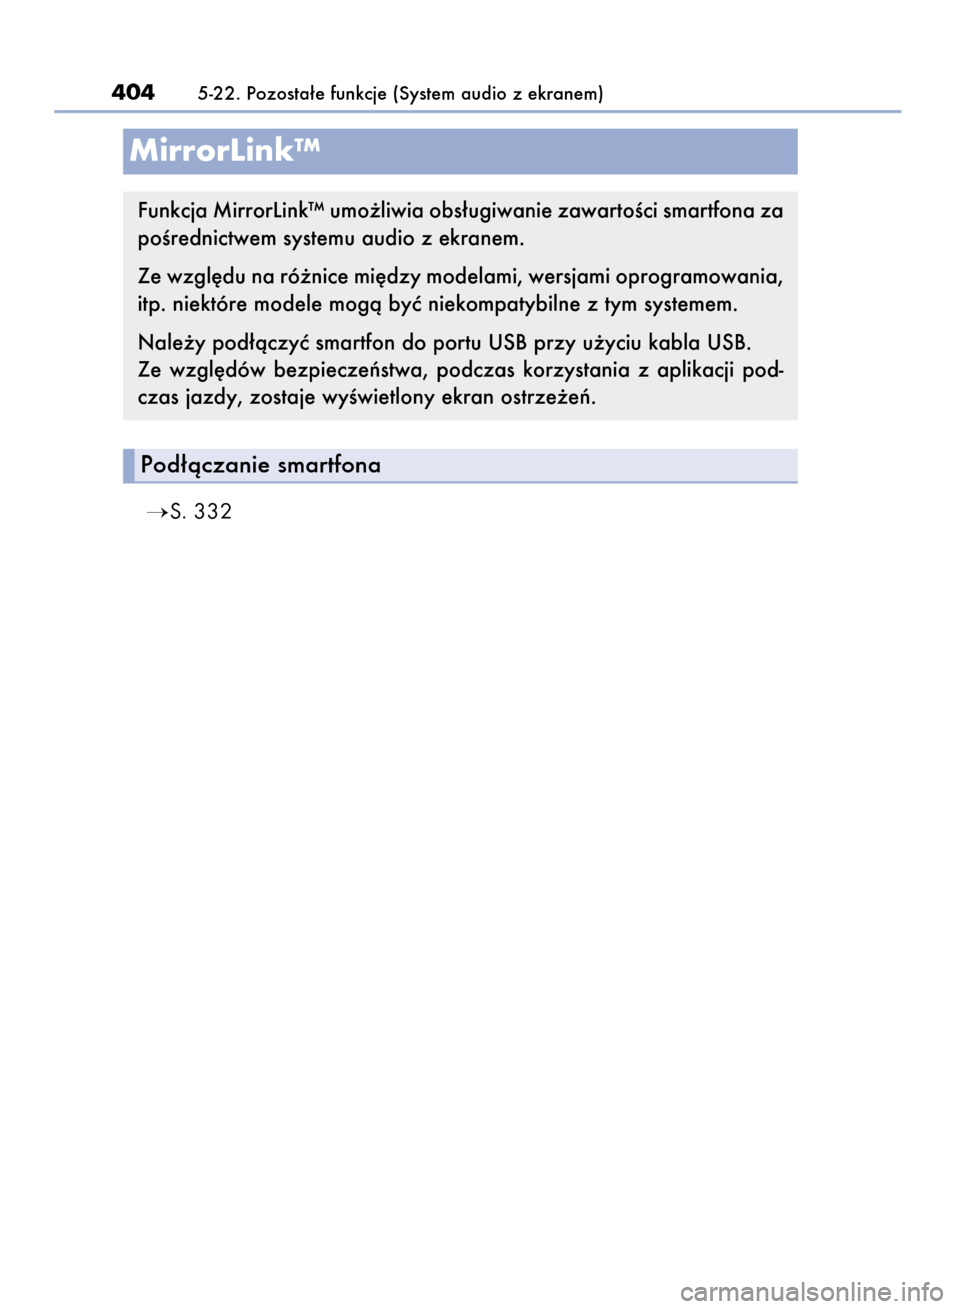 Lexus CT200h 2016  Instrukcja Obsługi (in Polish) S. 332
4045-22. Pozosta∏e funkcje (System audio z ekranem)
MirrorLink™
Pod∏àczanie smartfona
Funkcja MirrorLink™ umo˝liwia obs∏ugiwanie zawartoÊci smartfona za
poÊrednictwem systemu aud